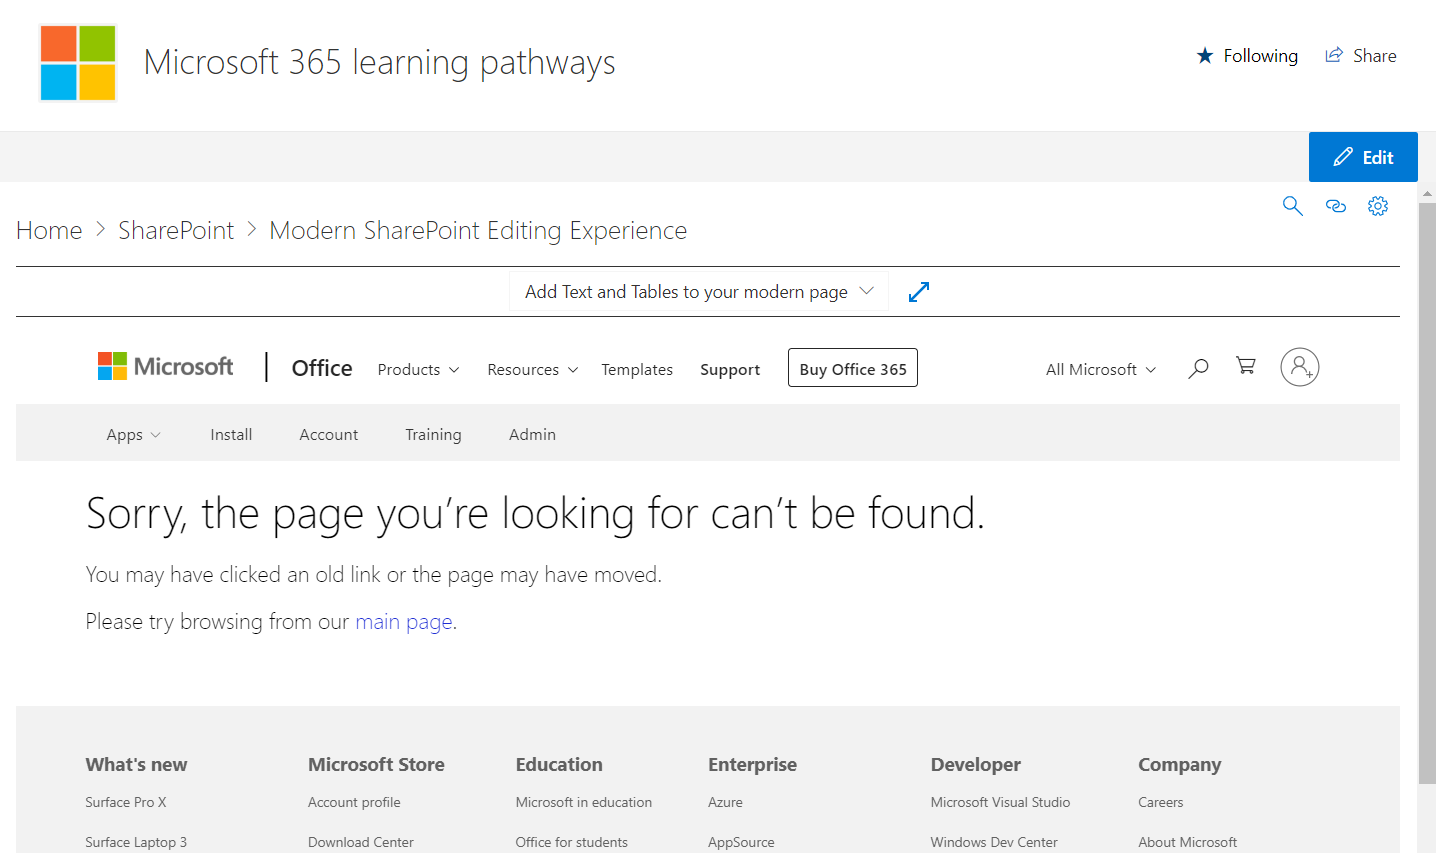 Add your profile photo to Microsoft 365 - Microsoft Support